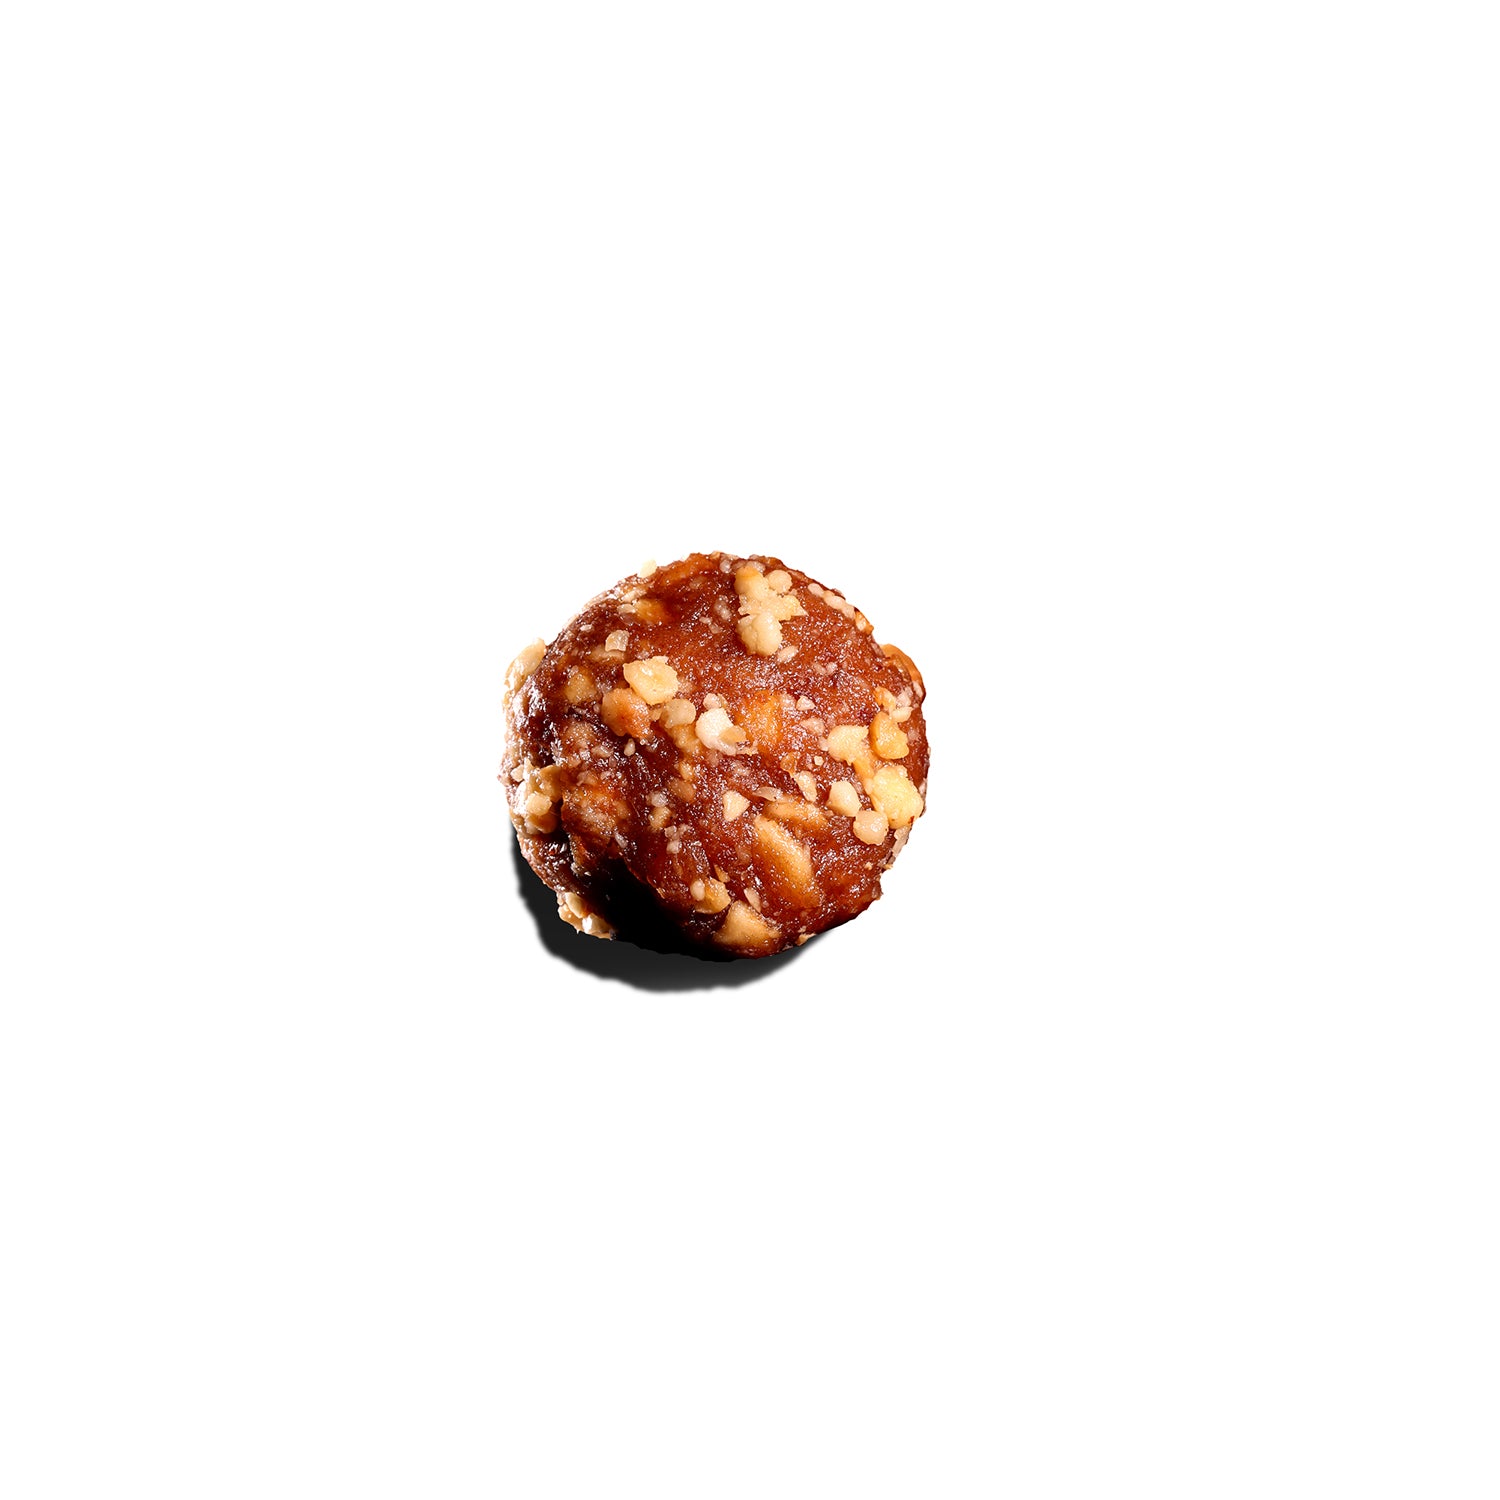 cravers crunchy hazelnut balls product